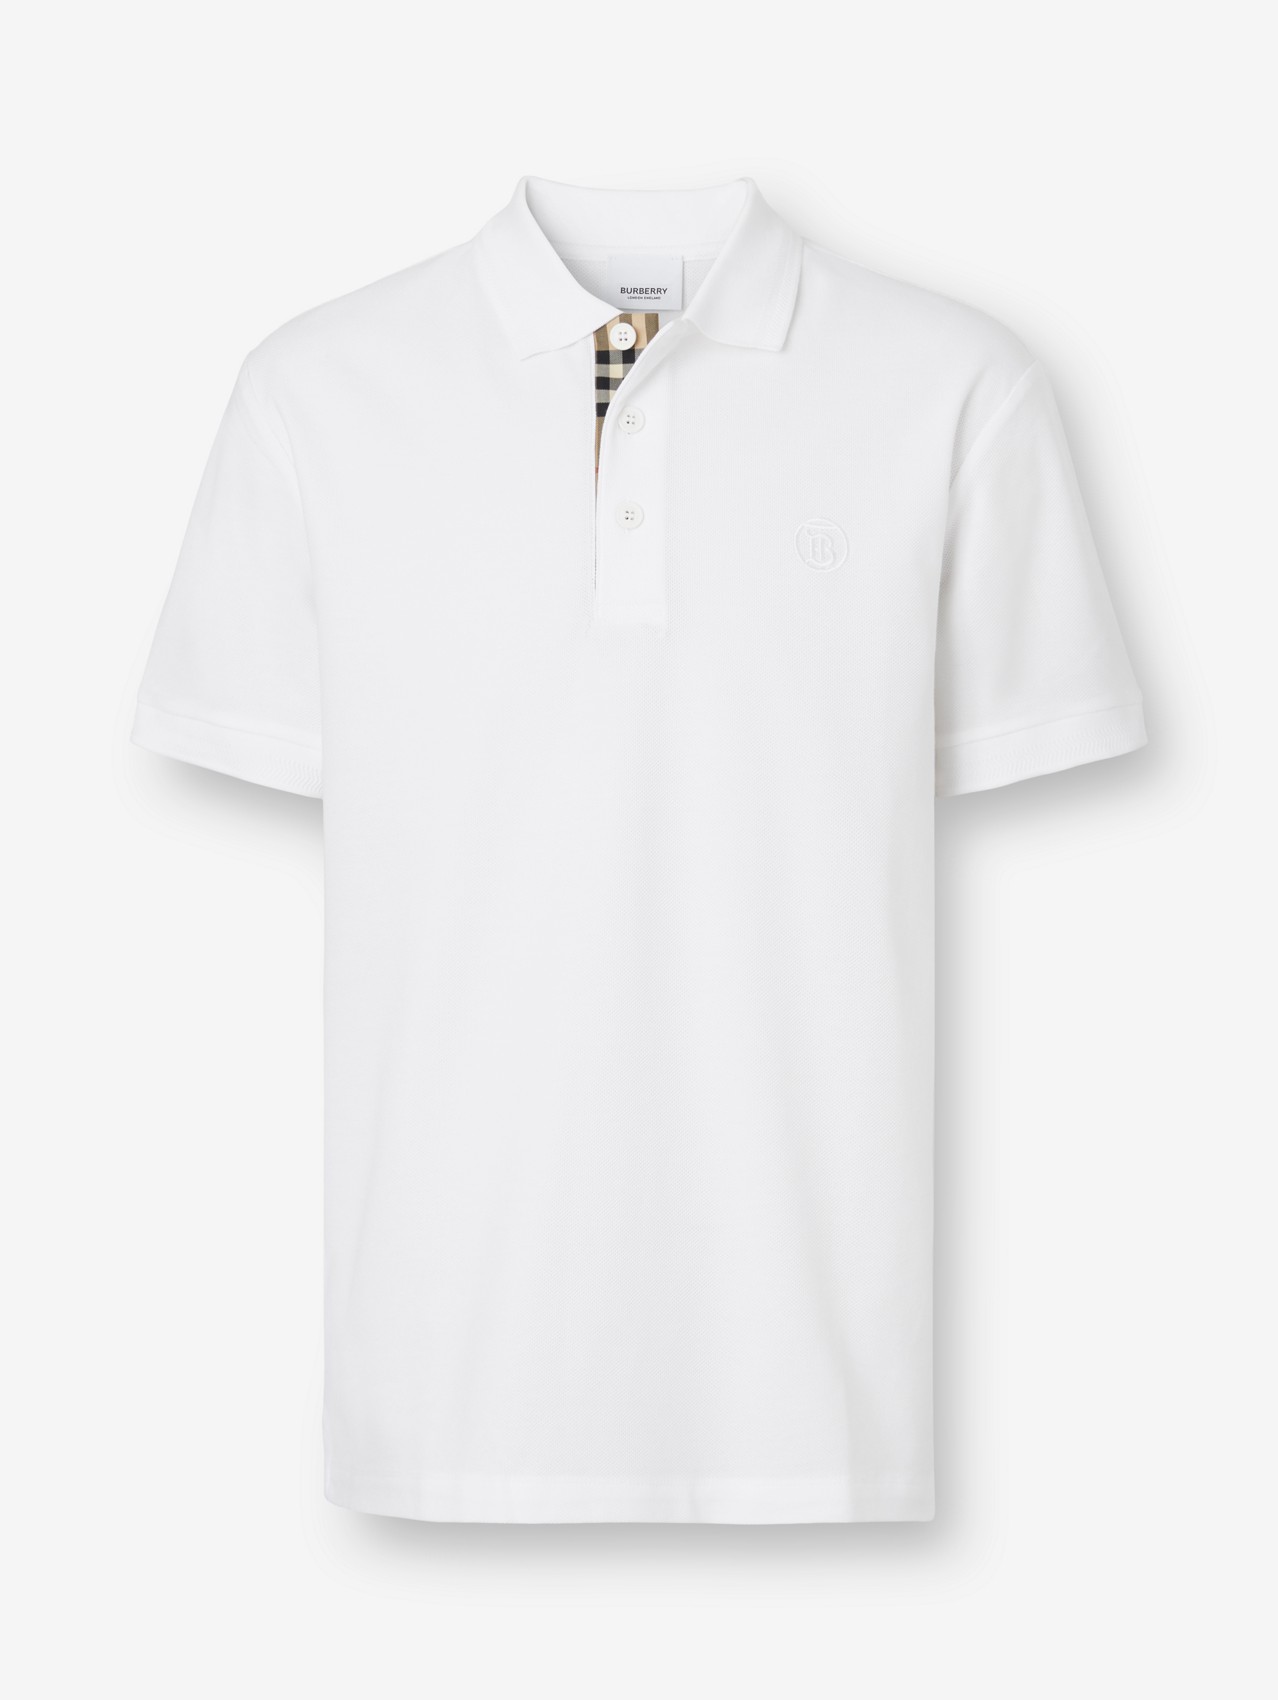 Intimidatie Secretaris Bladeren verzamelen Men's Designer Polo Shirts & T-shirts | Burberry® Official